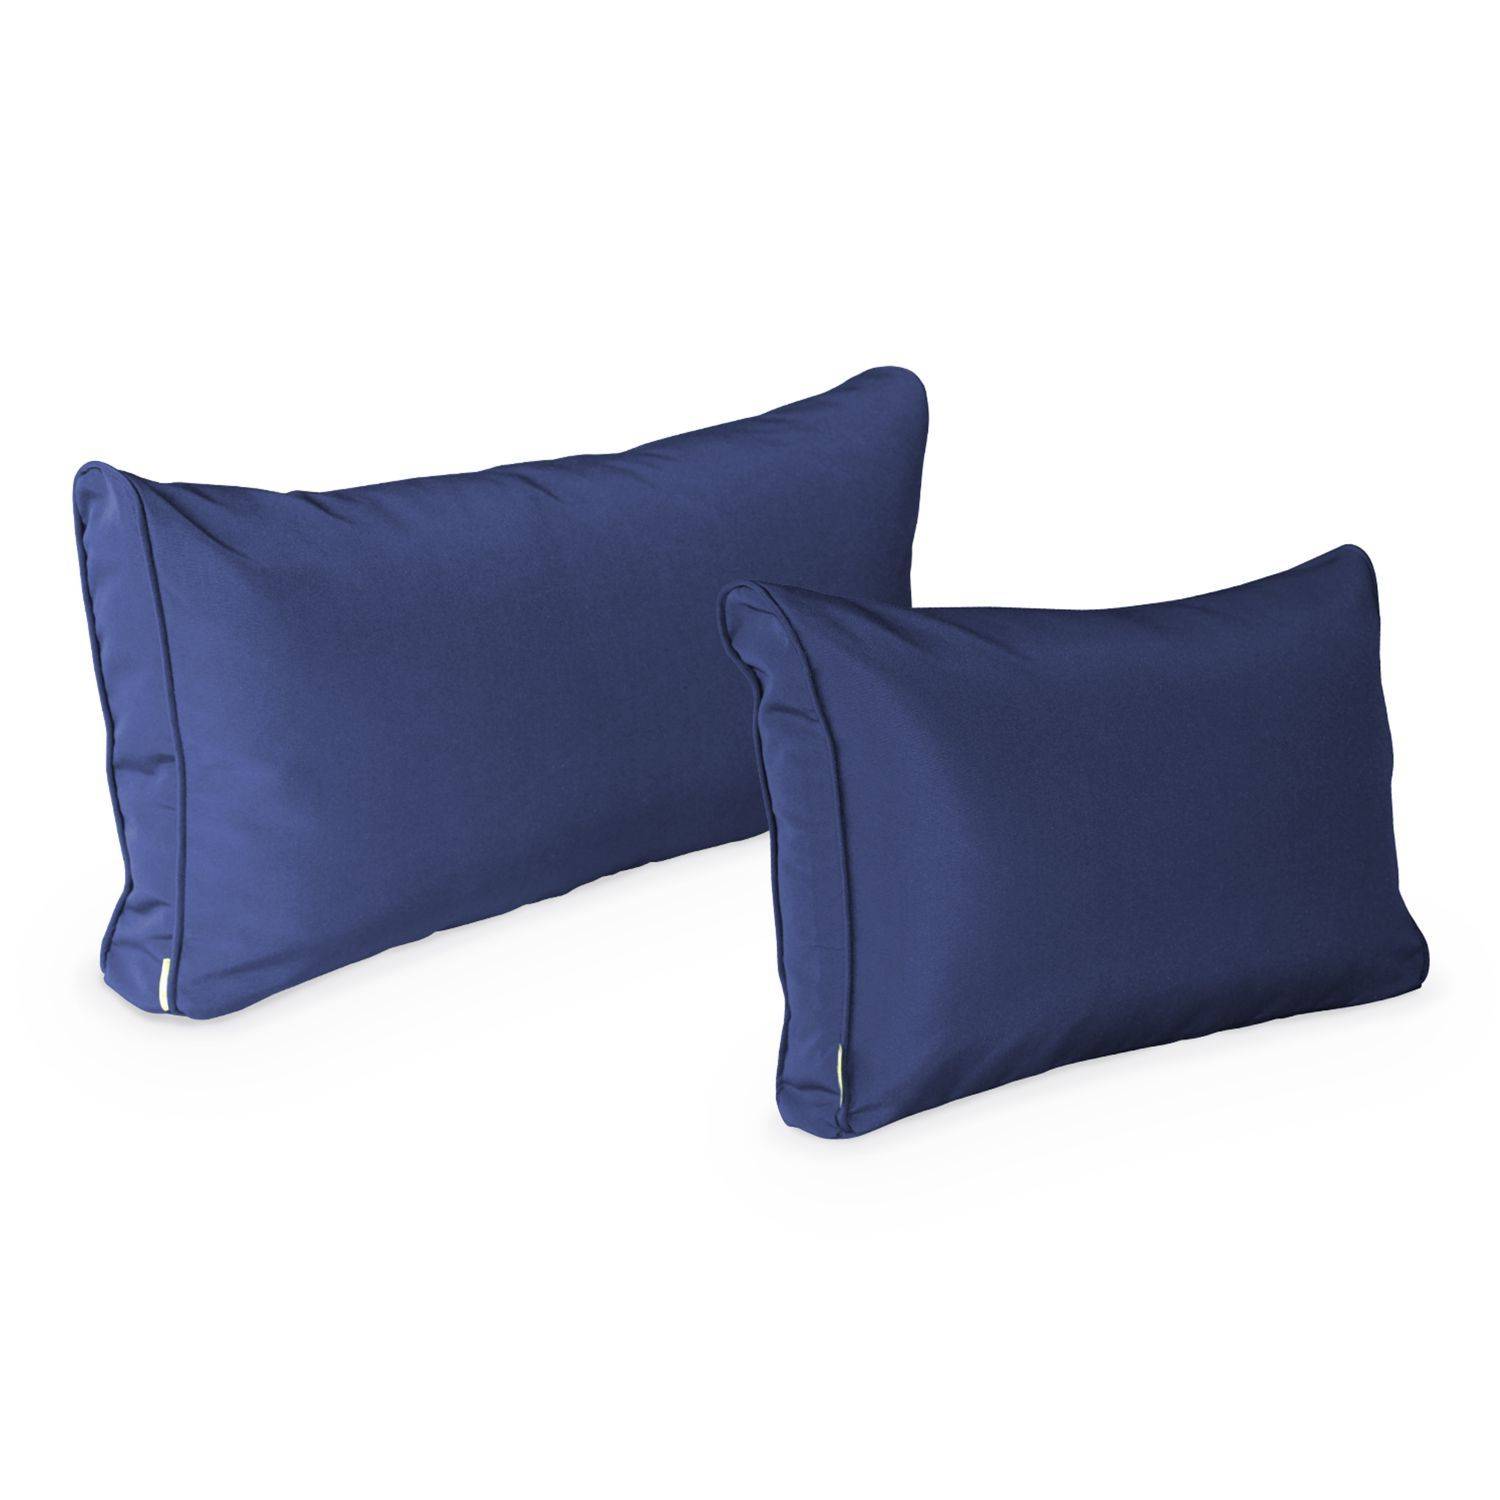 Blue cushion cover set for Napoli garden set - complete set Photo2